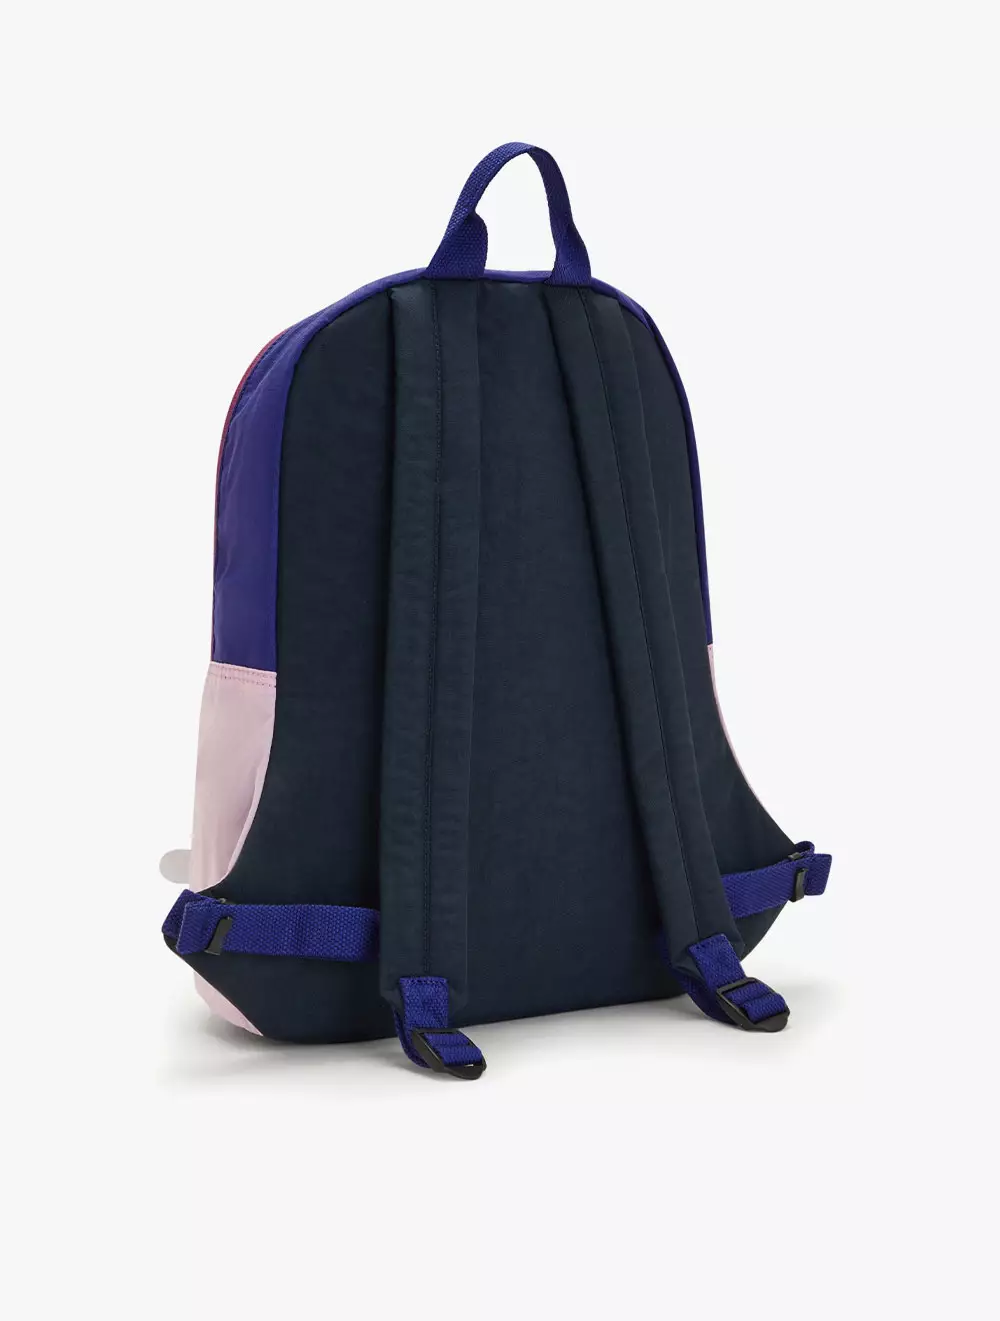 Kipling on X: This is an upcycled slimline backpack. Kipling's